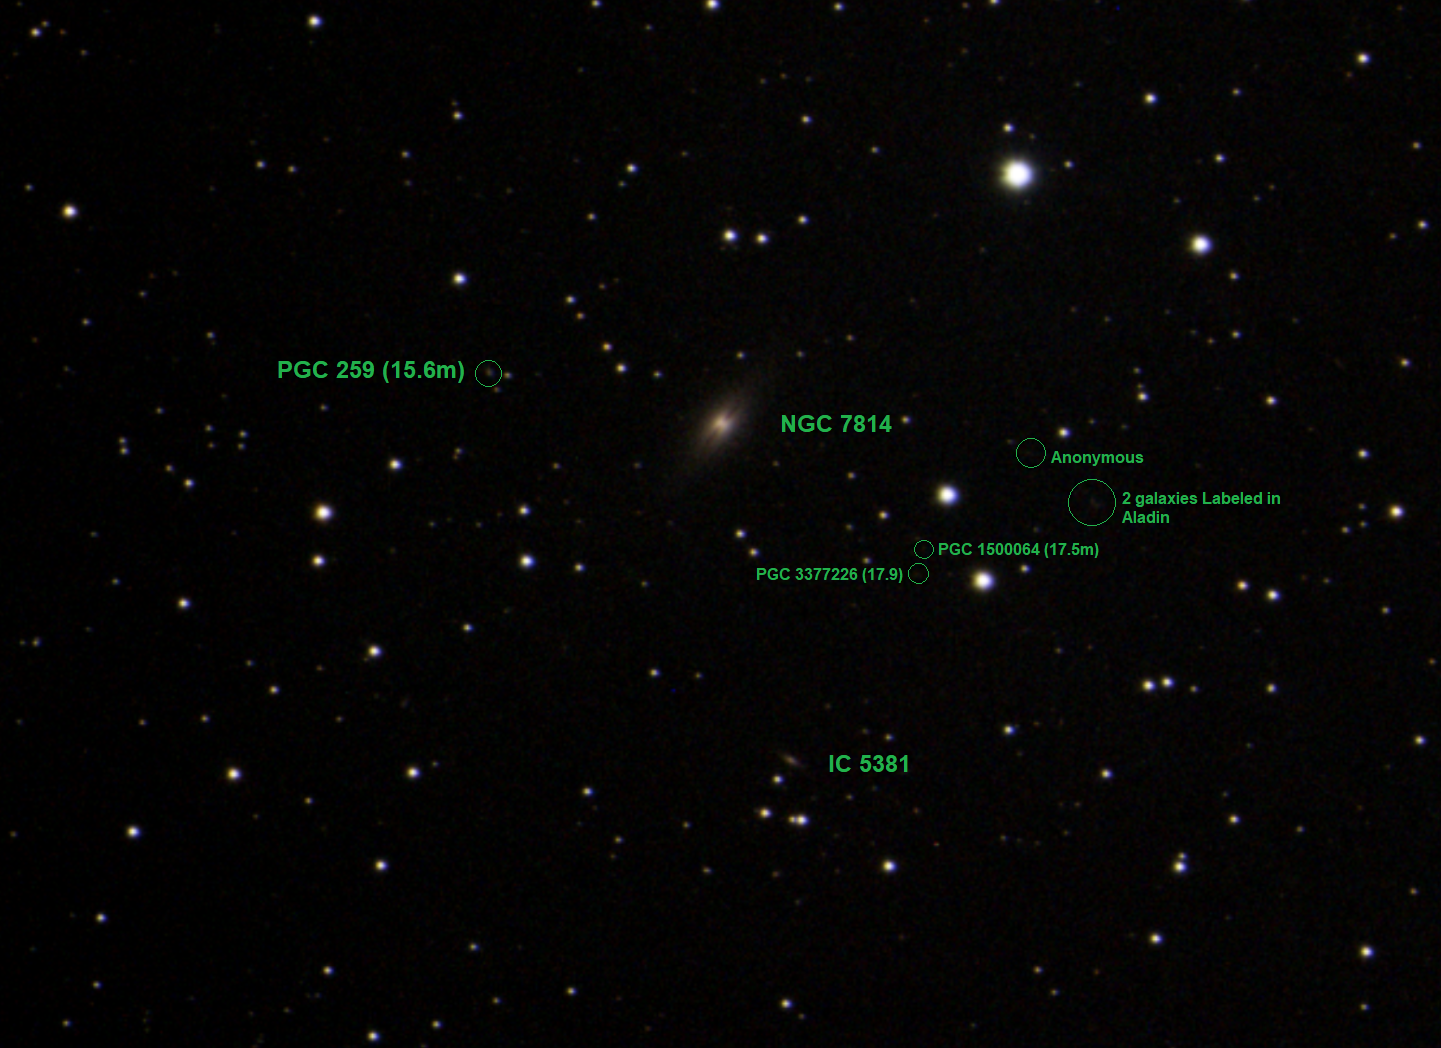 NGC7814 1 Labeled